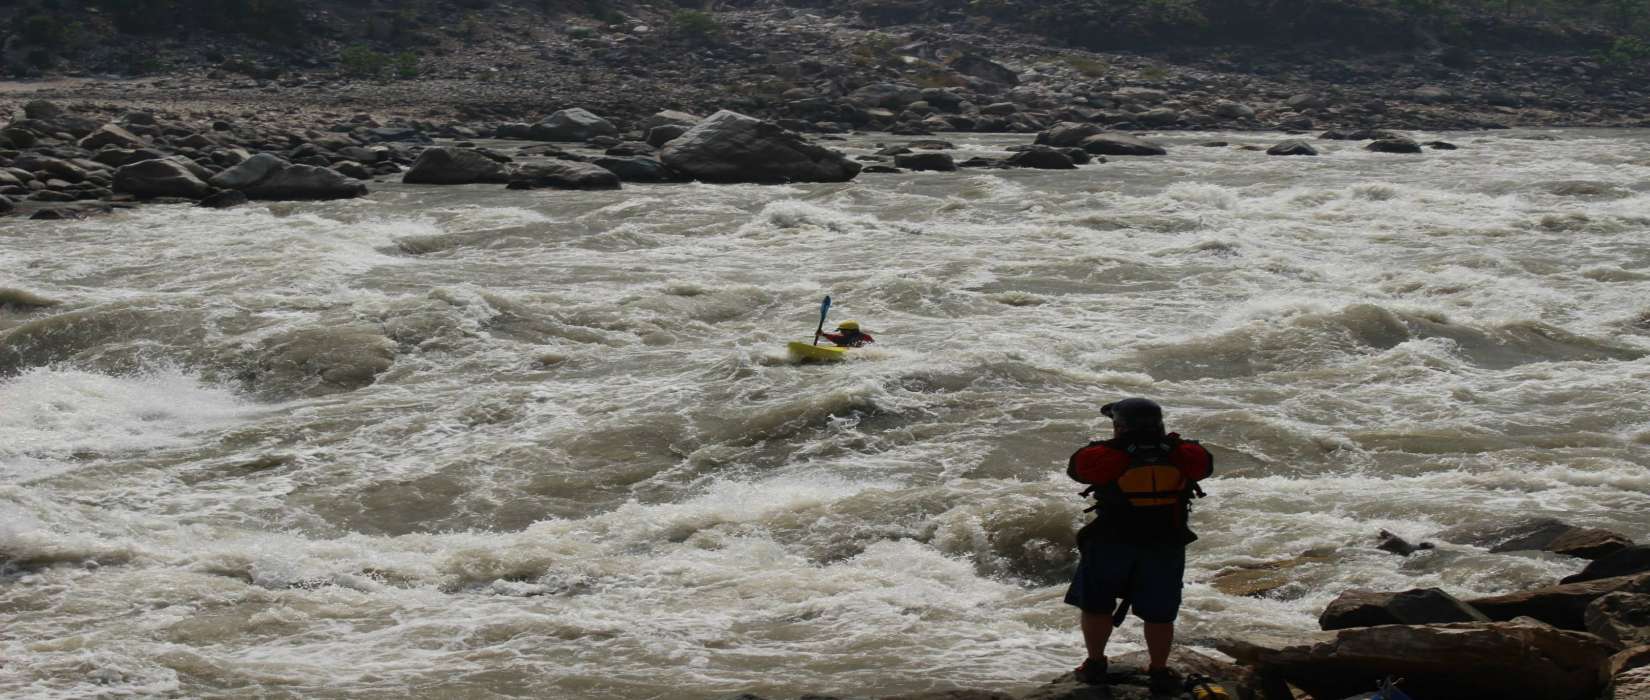 Kayaking in the Himalayan Rivers